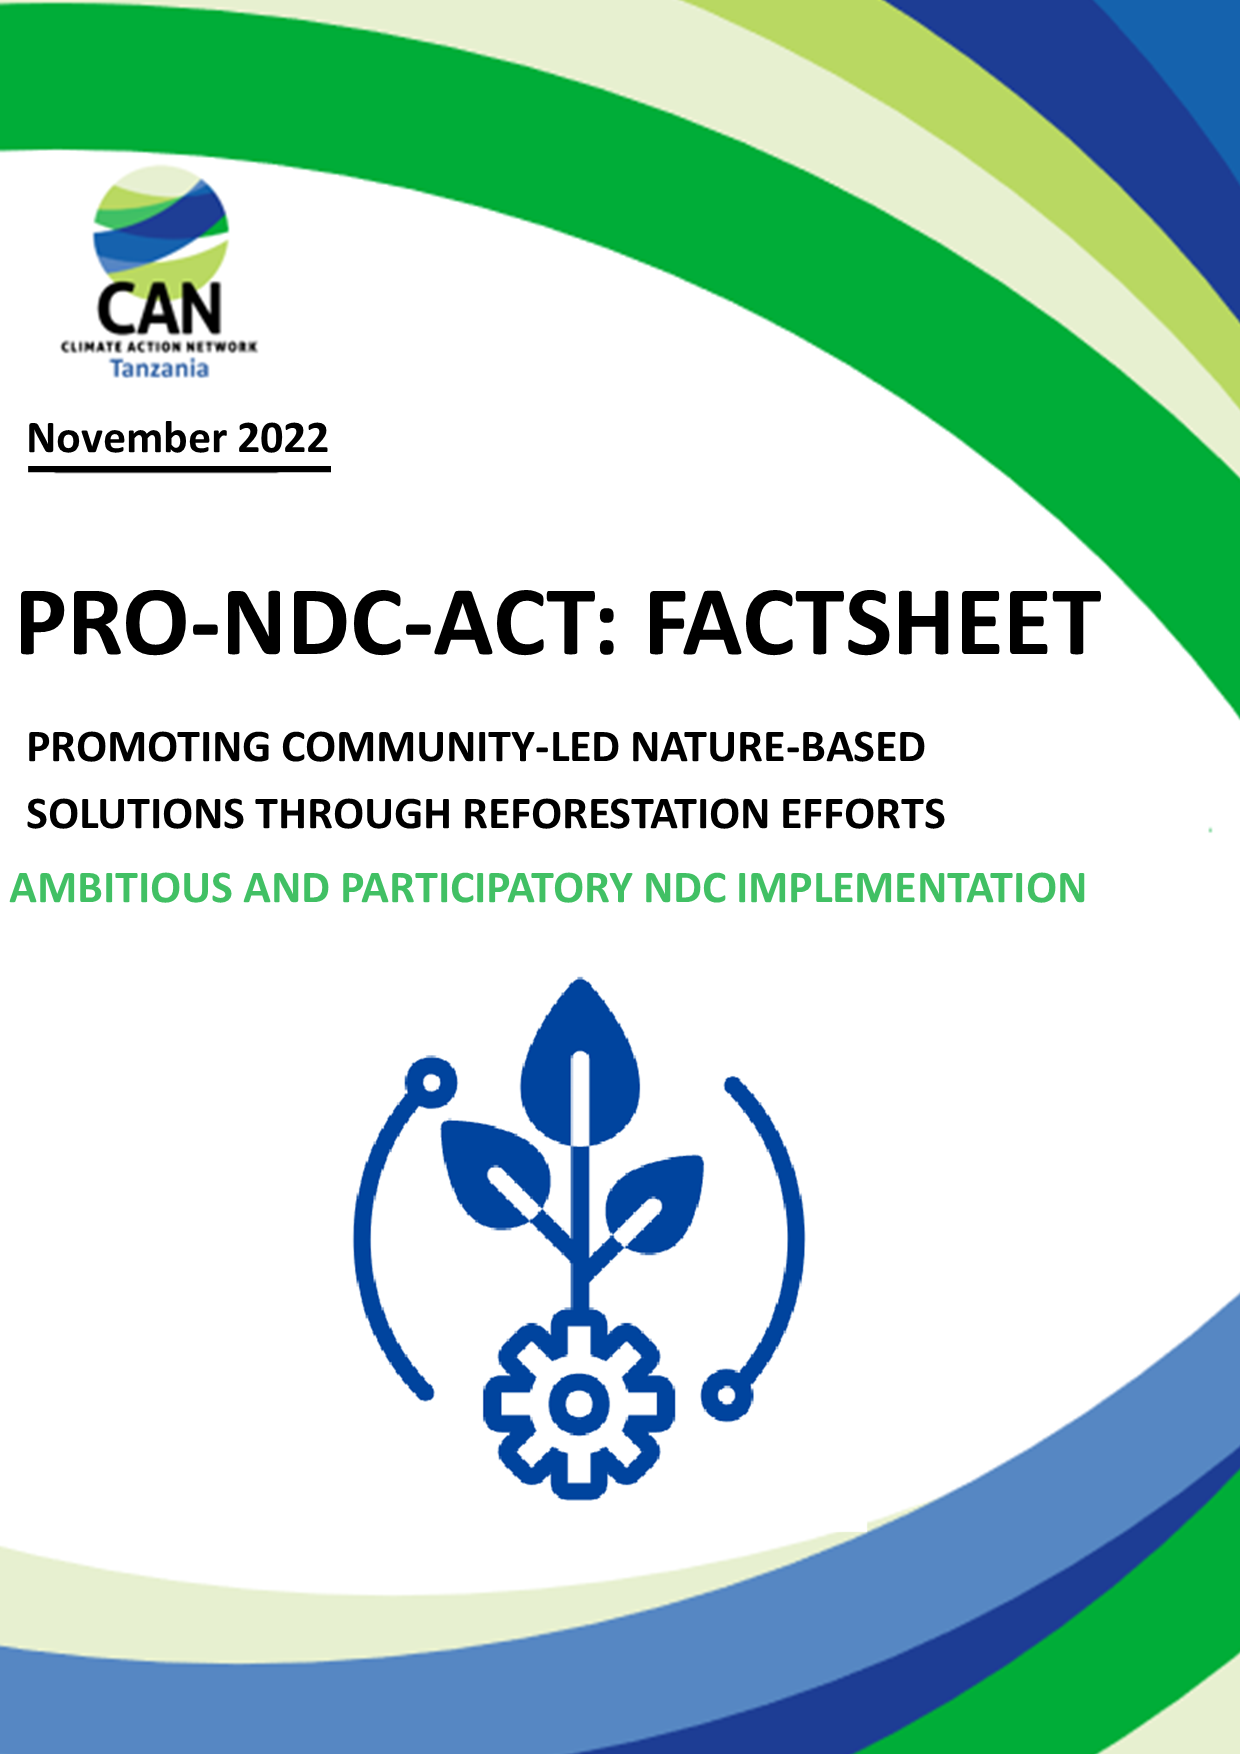 PRO-NDC-ACT Factsheet: Promoting Community-Led Nature-Based Solutions